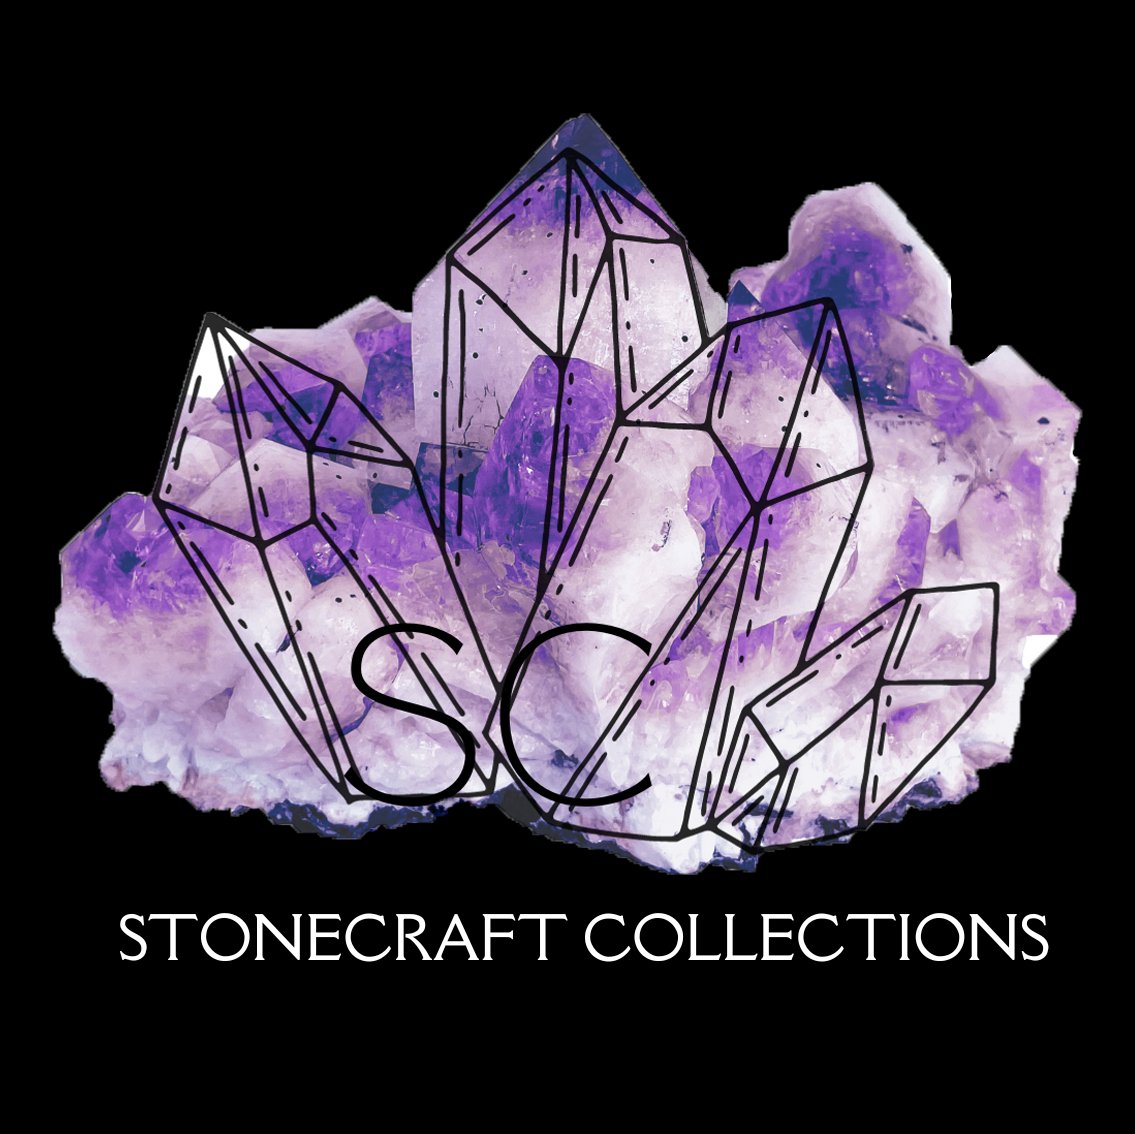 Stonecraftcollections.com